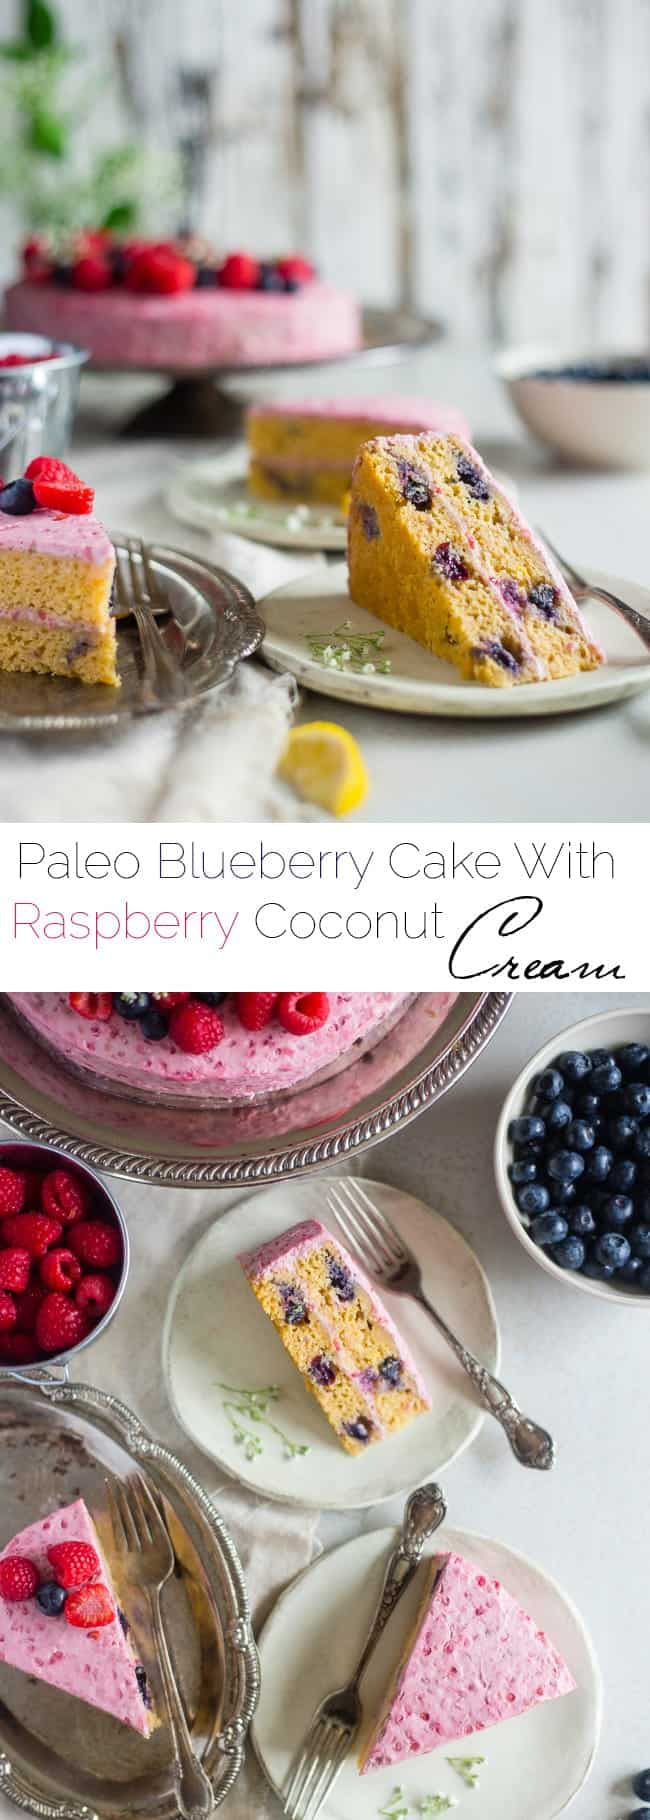 Paleo Blueberry Cake with Raspberry Coconut Cream - This layered paleo cake has fresh, juicy blueberries and raspberry coconut whipped cream! It's a healthier, gluten free dessert that's perfect for summer! | Foodfaithfitness.com | @FoodFaithFit